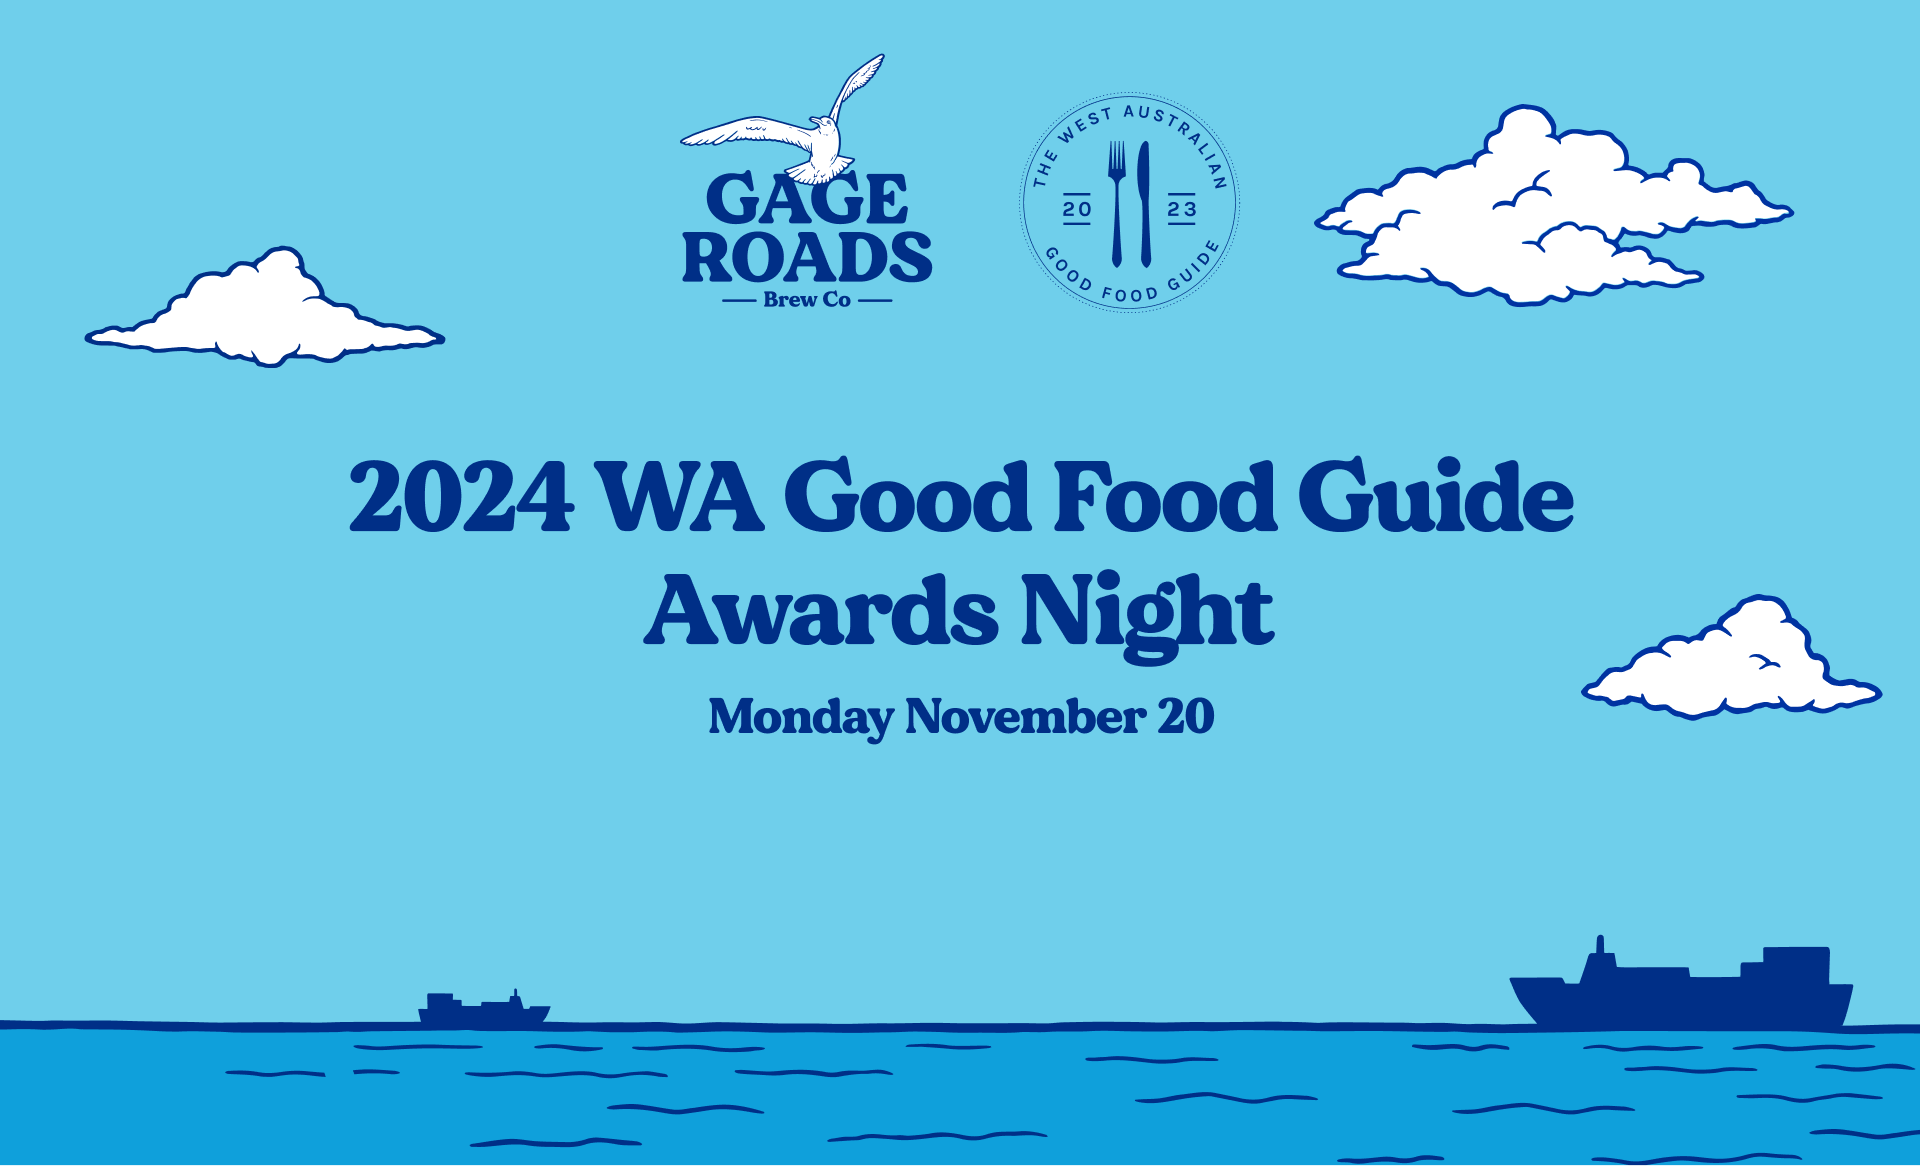 wagfg_awards_2024 WA Good Food Guide